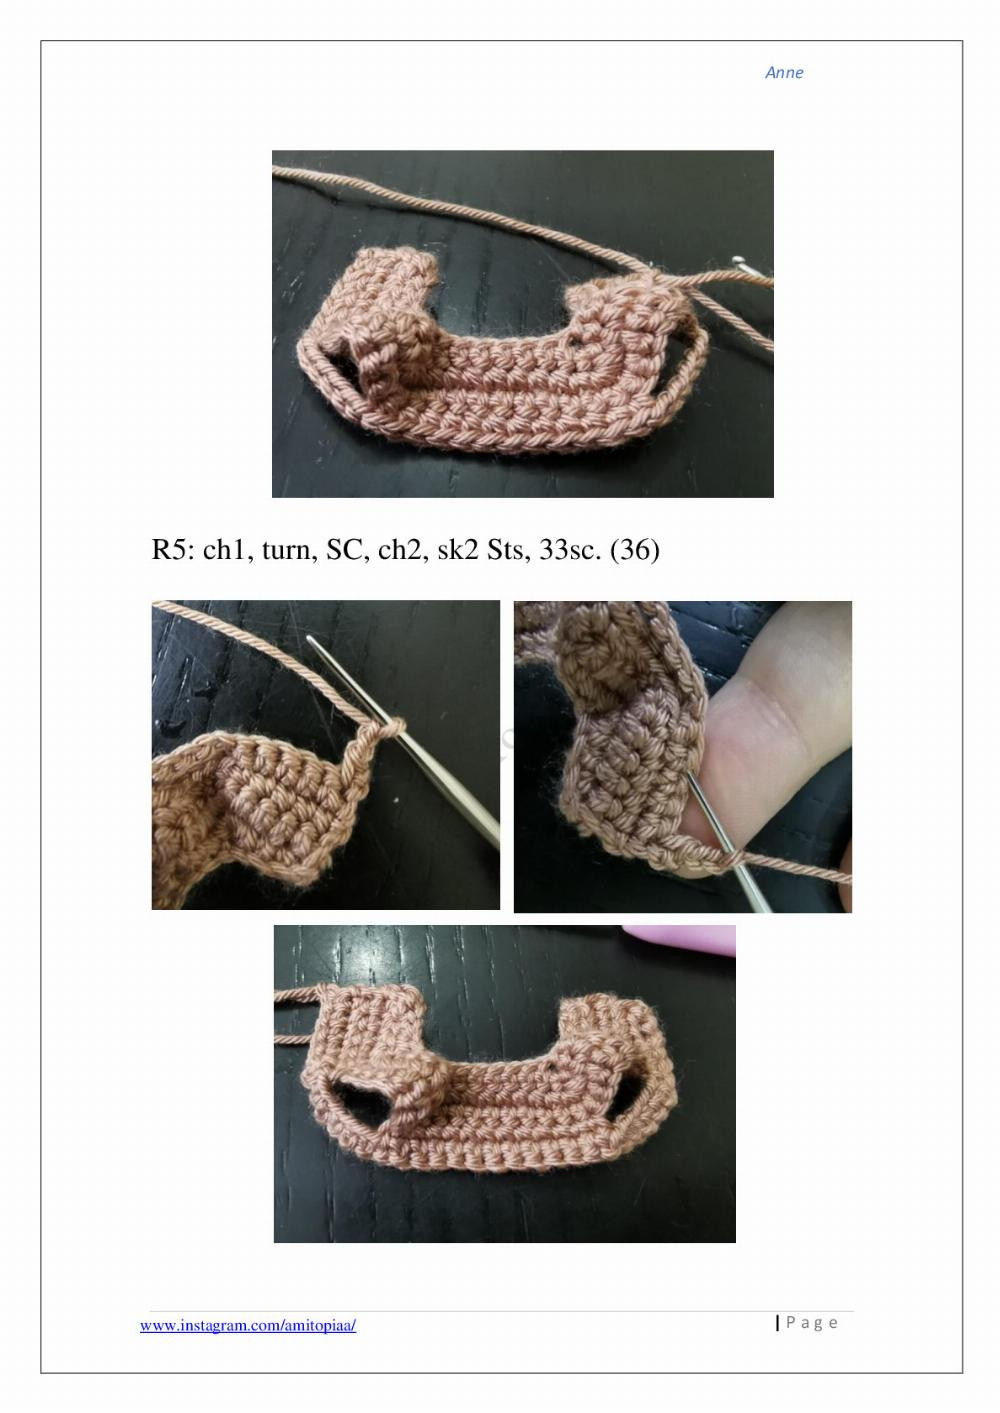 Anne with an e crochet pattern